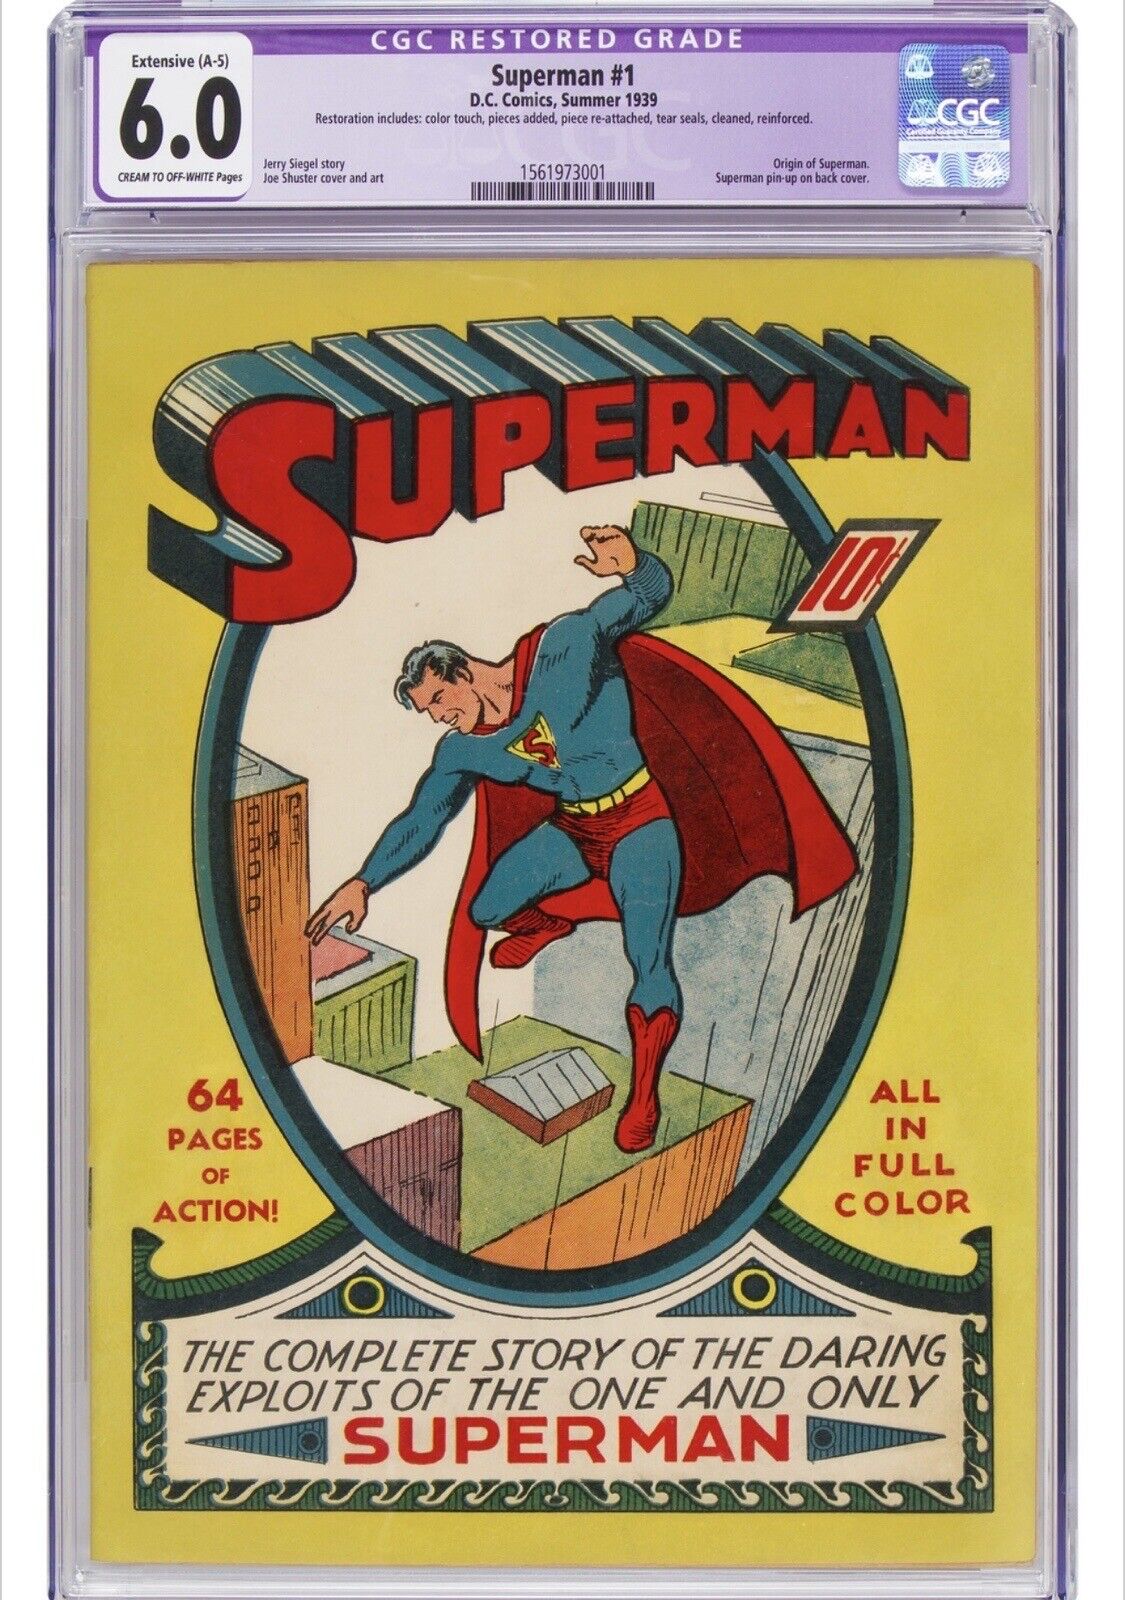 Superman #1  6.0 CGC Professional Restoration (A), Extensive (5) Superman 1939